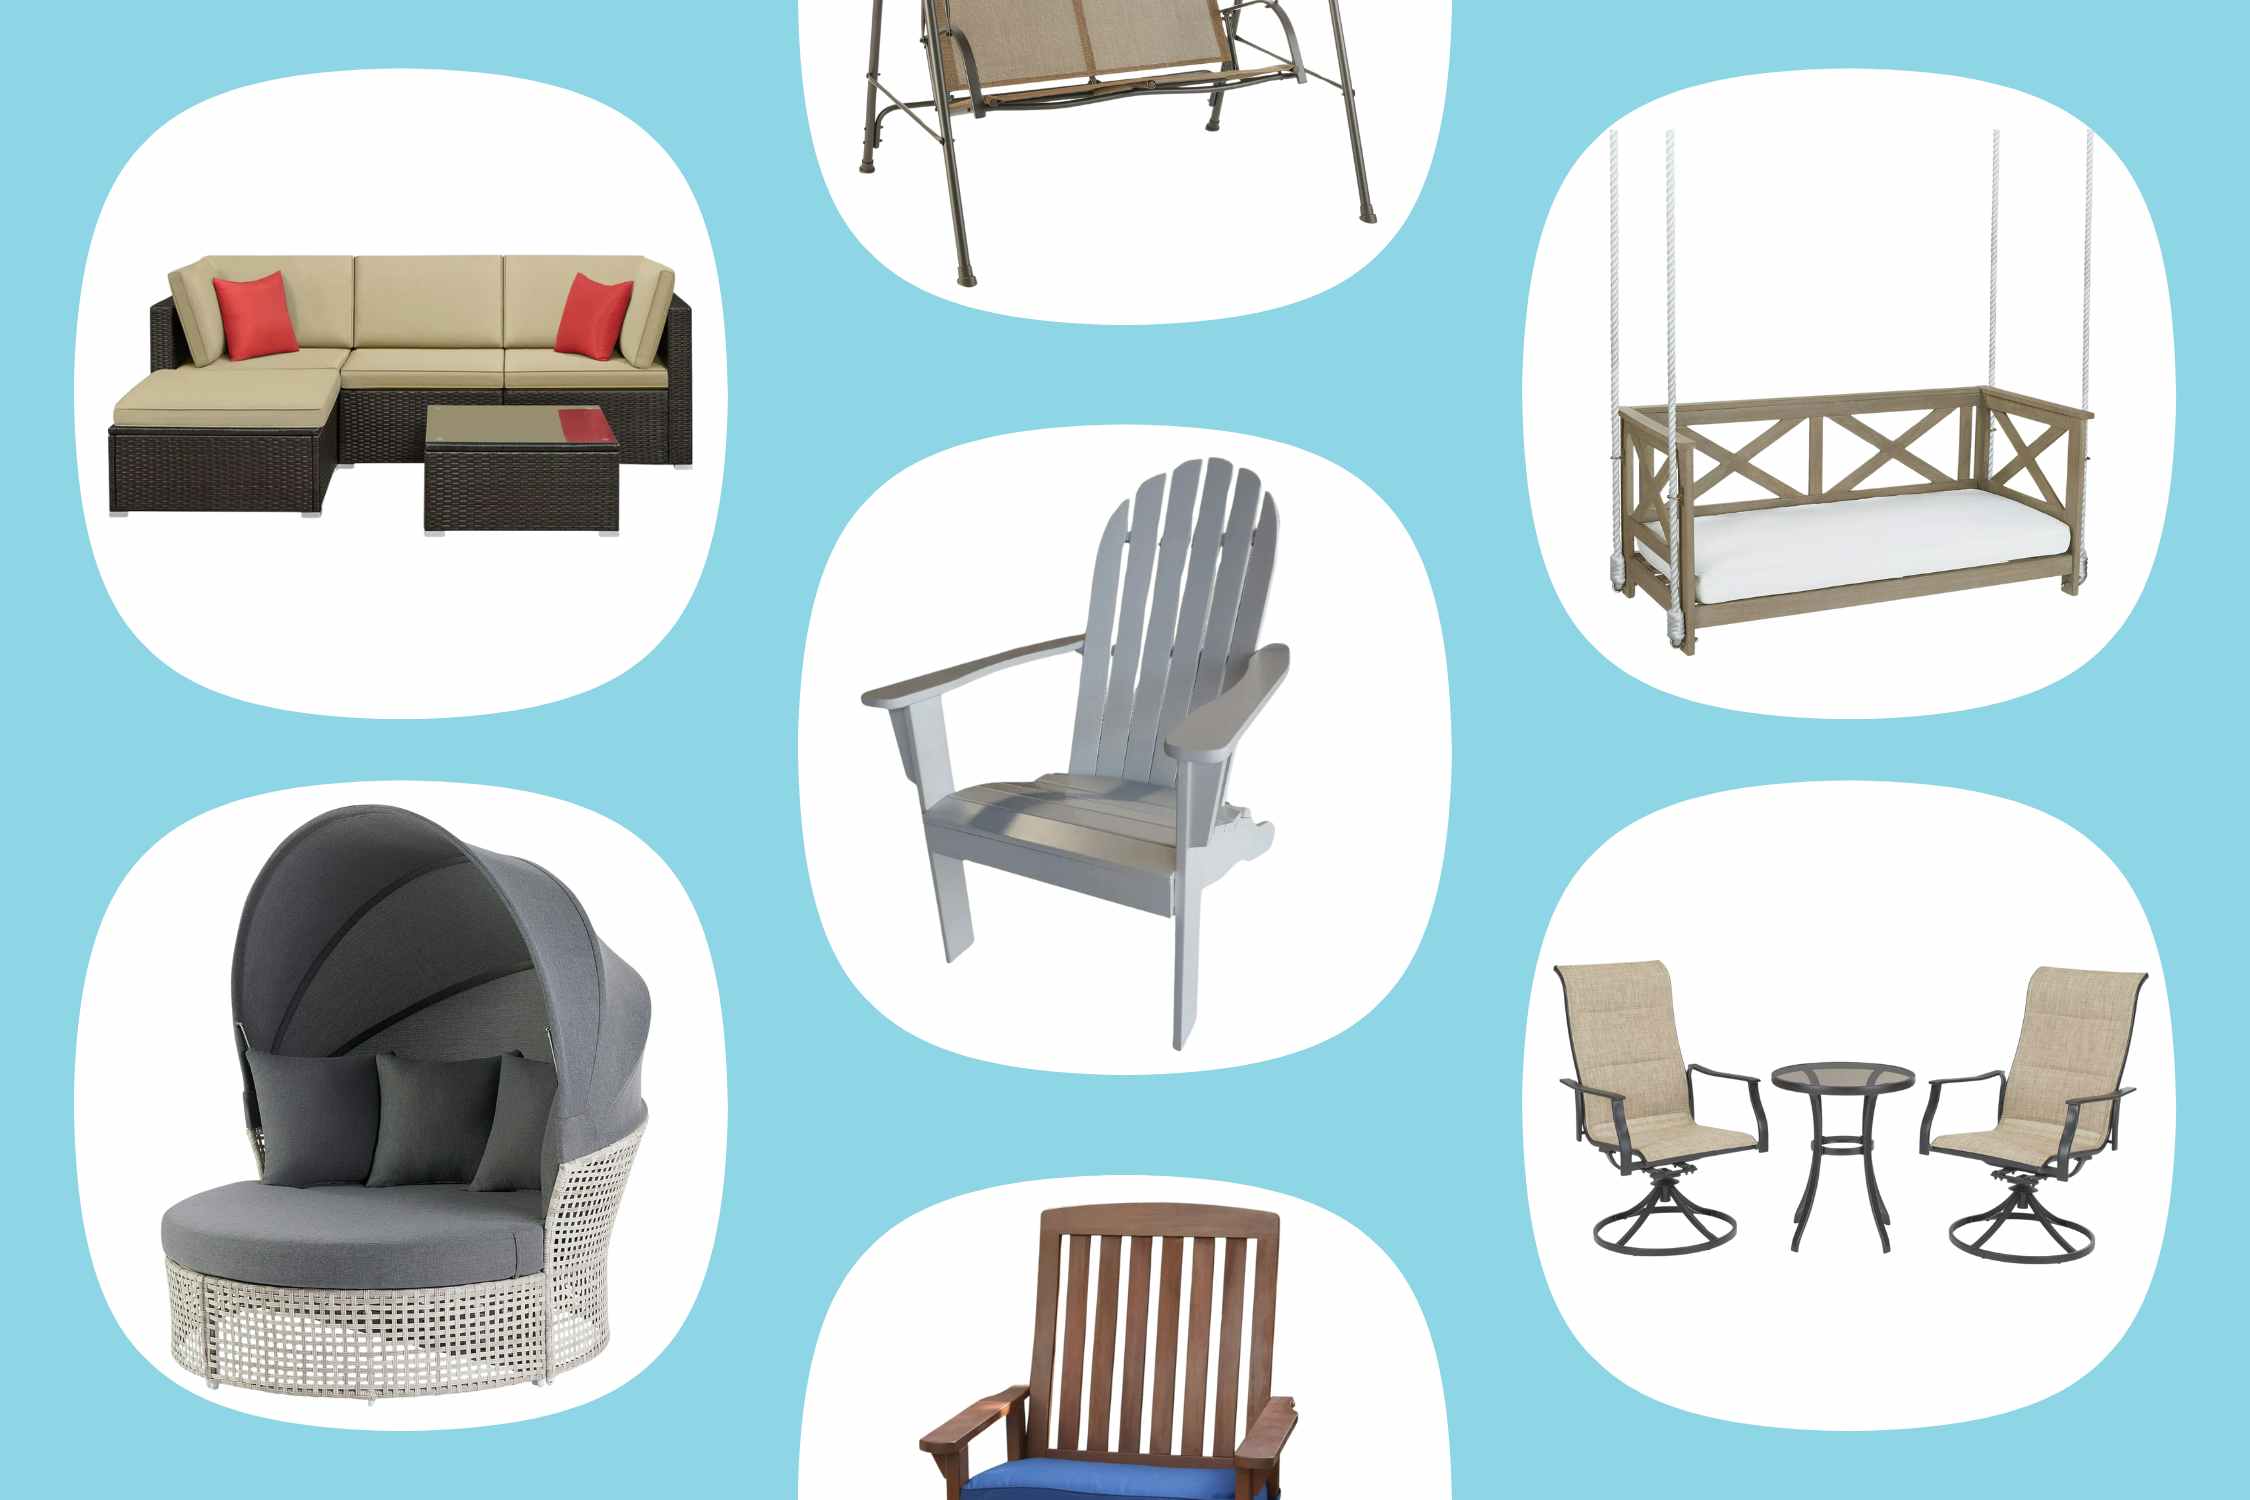 Massive Patio Furniture Sale at Walmart — Prices Start at $62